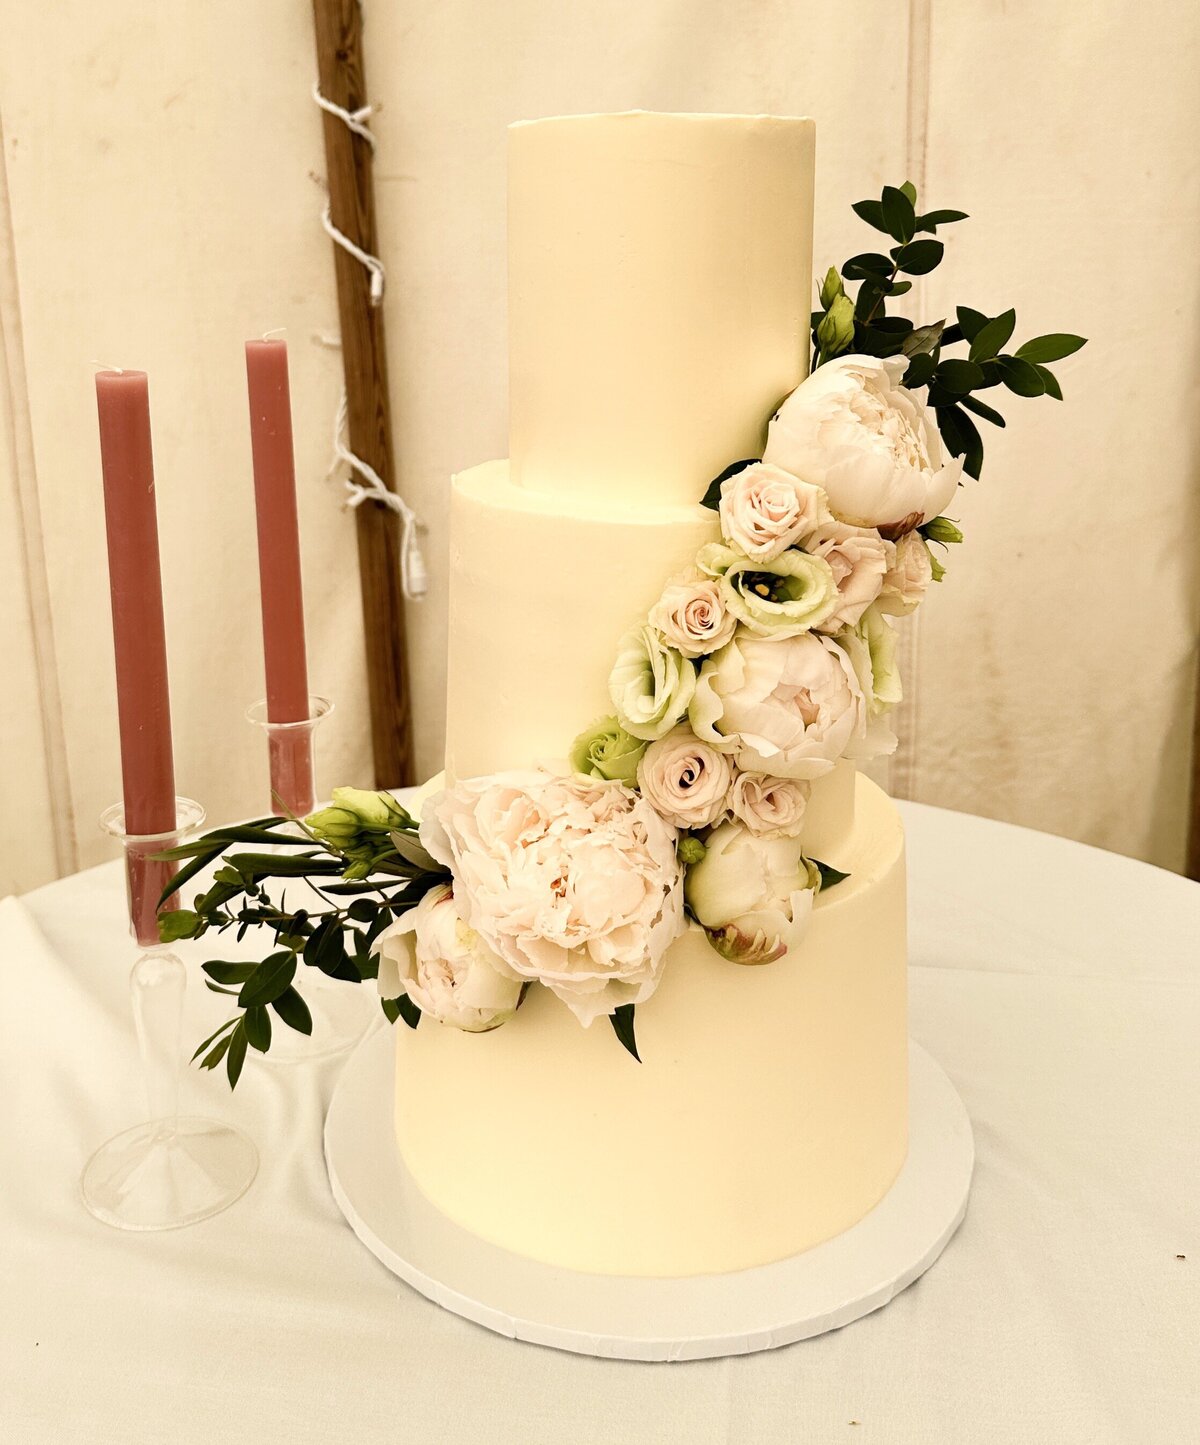 layers-graces-three-tier-wedding-cake-peonies-fresh-flowers-luxury